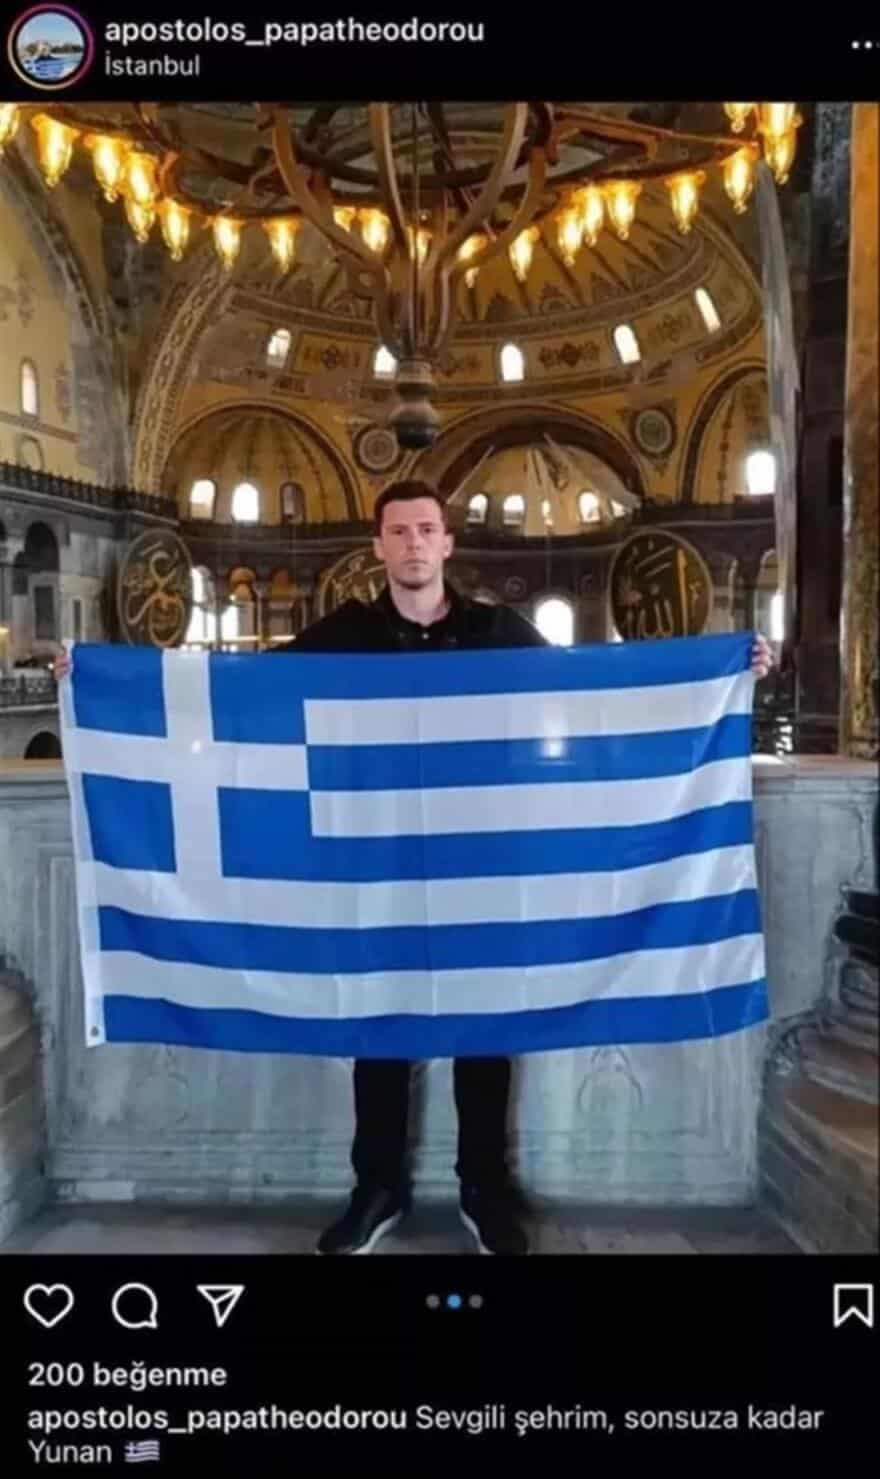 anartisi agia sofisa - Σάλος στην Τουρκία: Έλληνας άνοιξε την ελληνική σημαία στην Αγία Σοφία